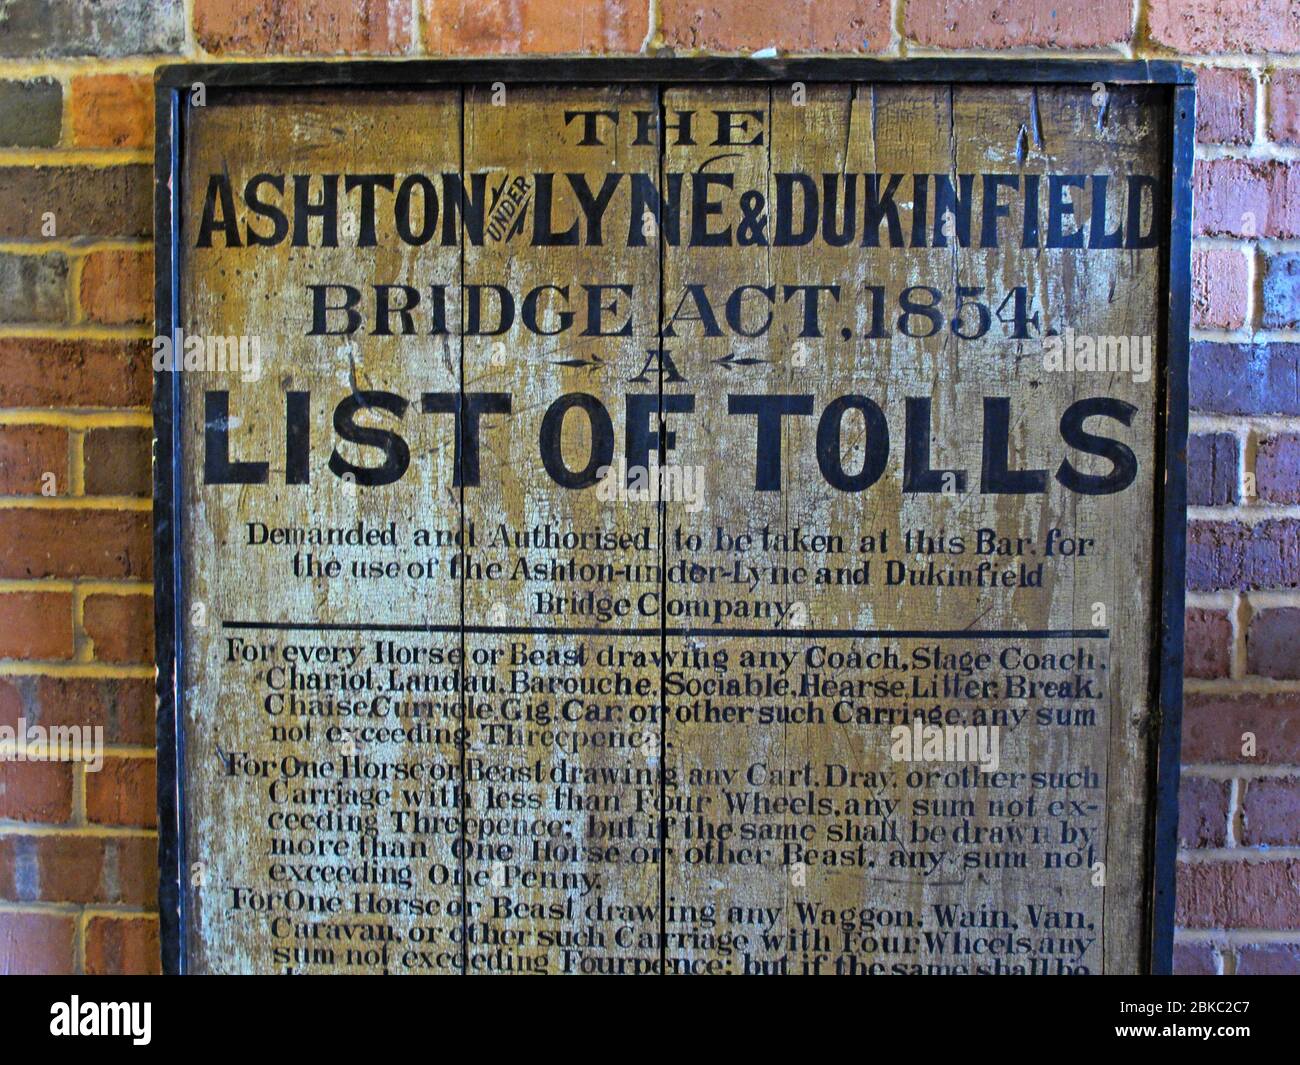 Ashton Under Lyne,Dukinfield, Bridge,Tolls , elenco dei pedaggi, Greater Manchester, GMC, Manchester,Inghilterra,UK Foto Stock